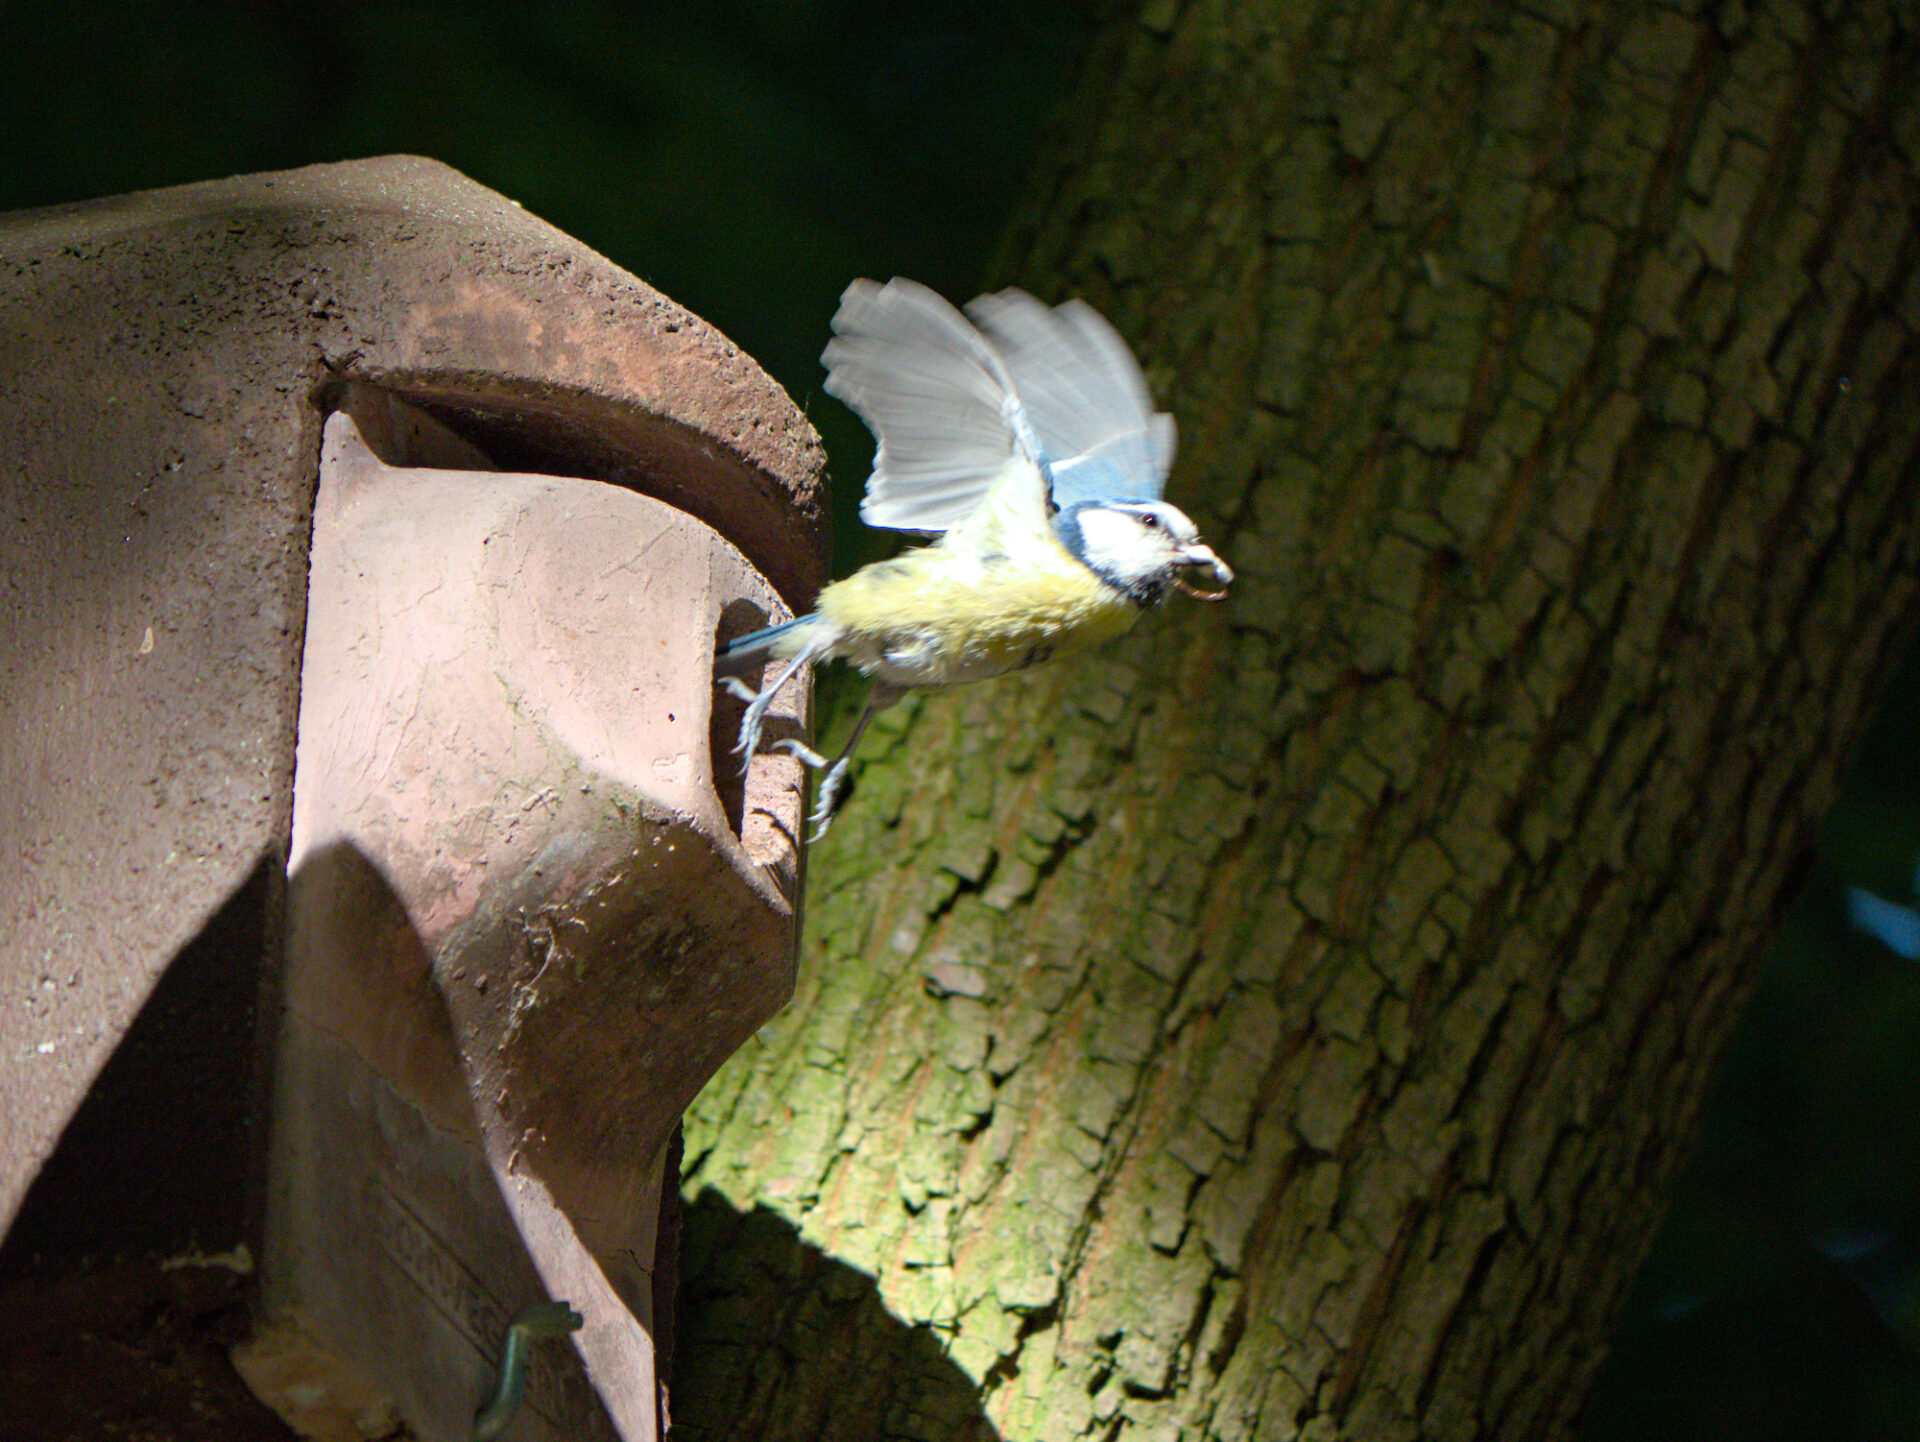 A blue tit exits a birdhouse, worm in beak